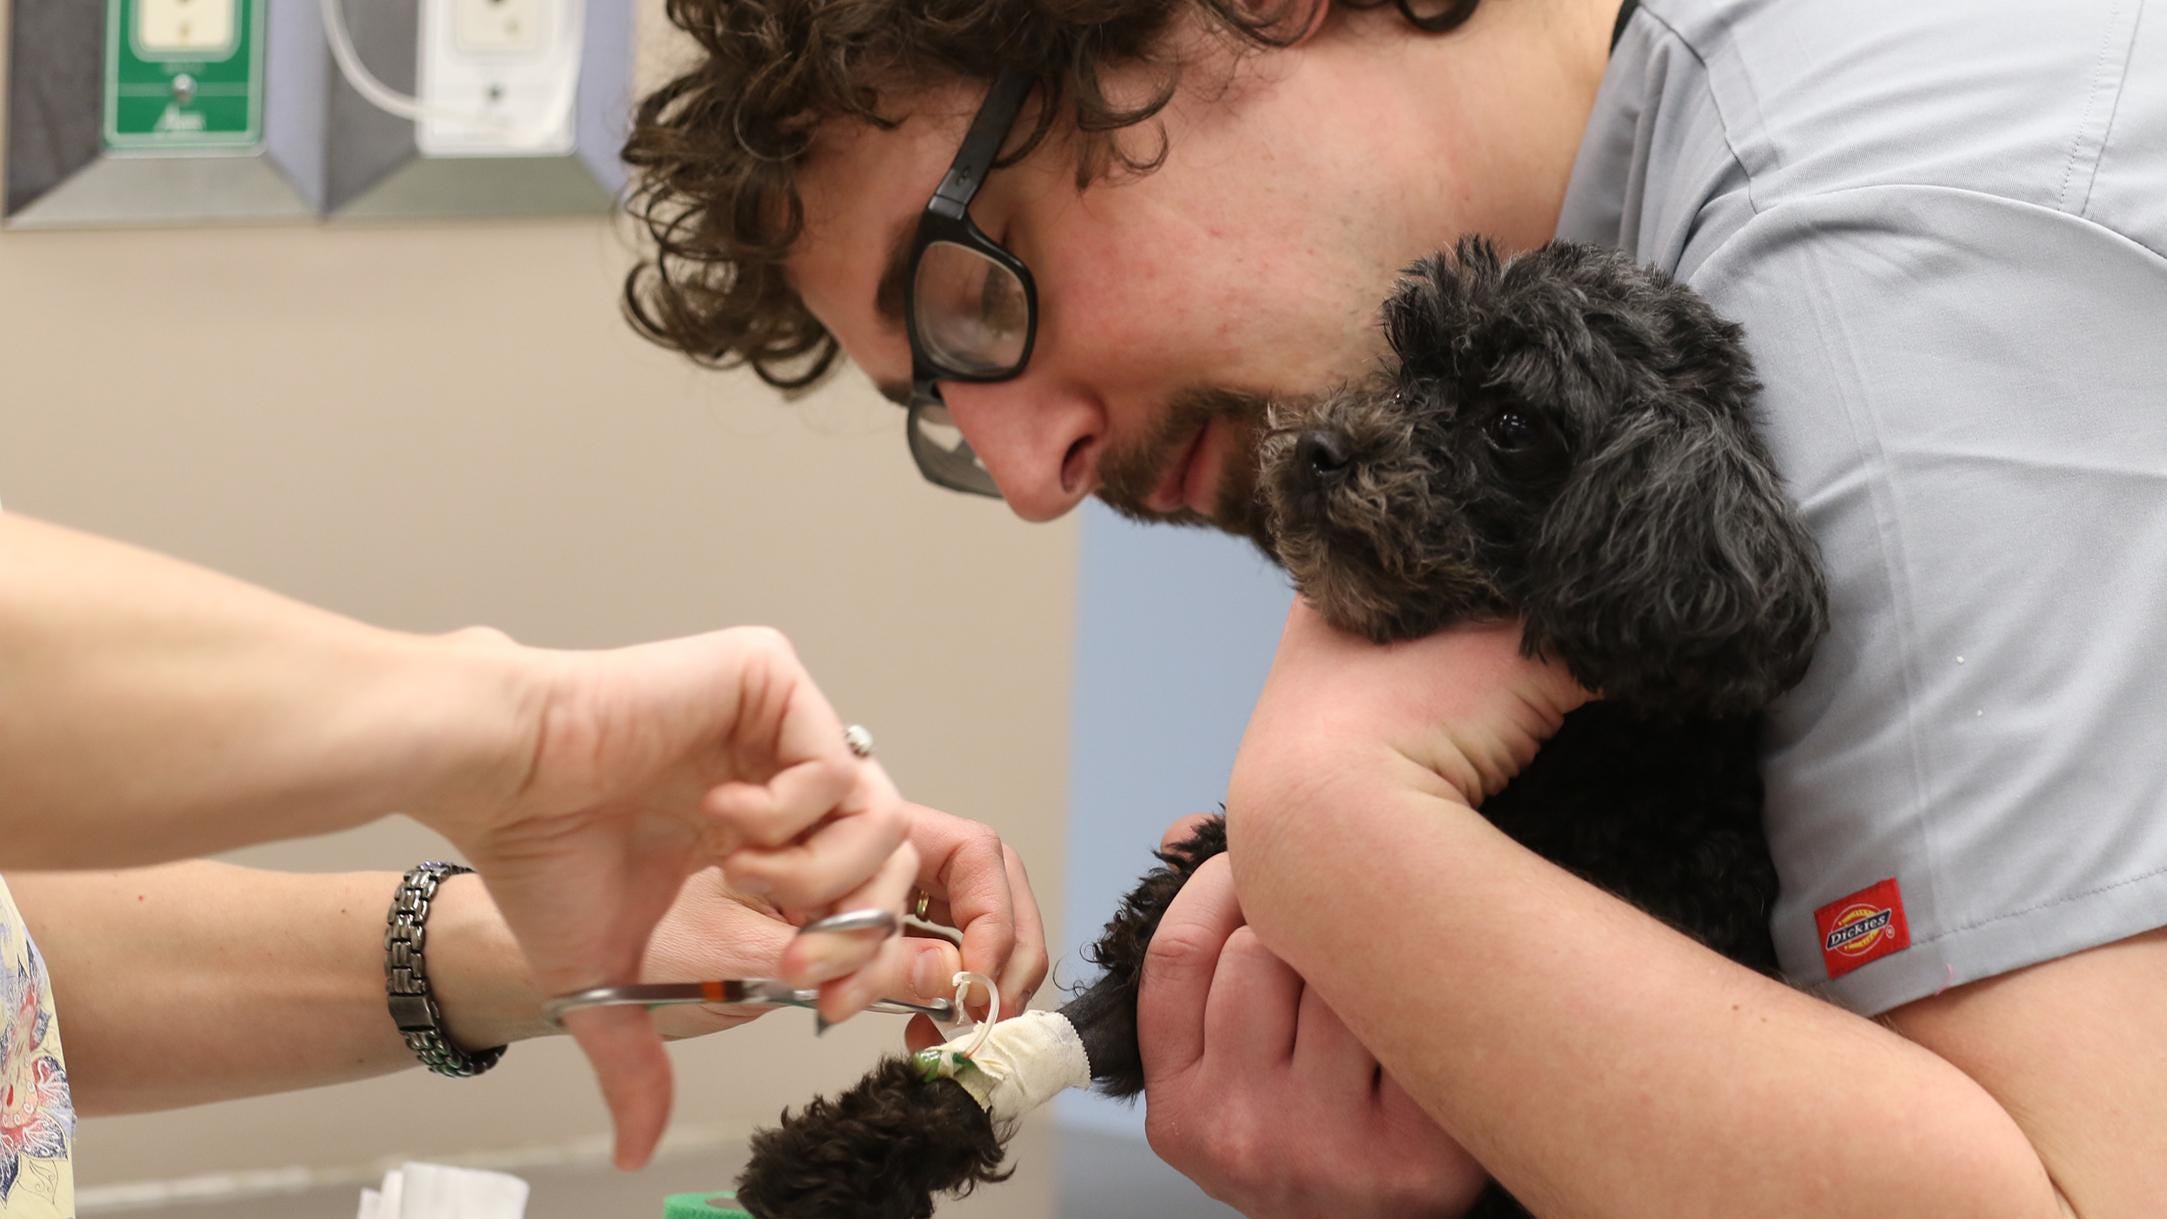 Hot Jobs: Veterinary assistants and laboratory animal caretakers